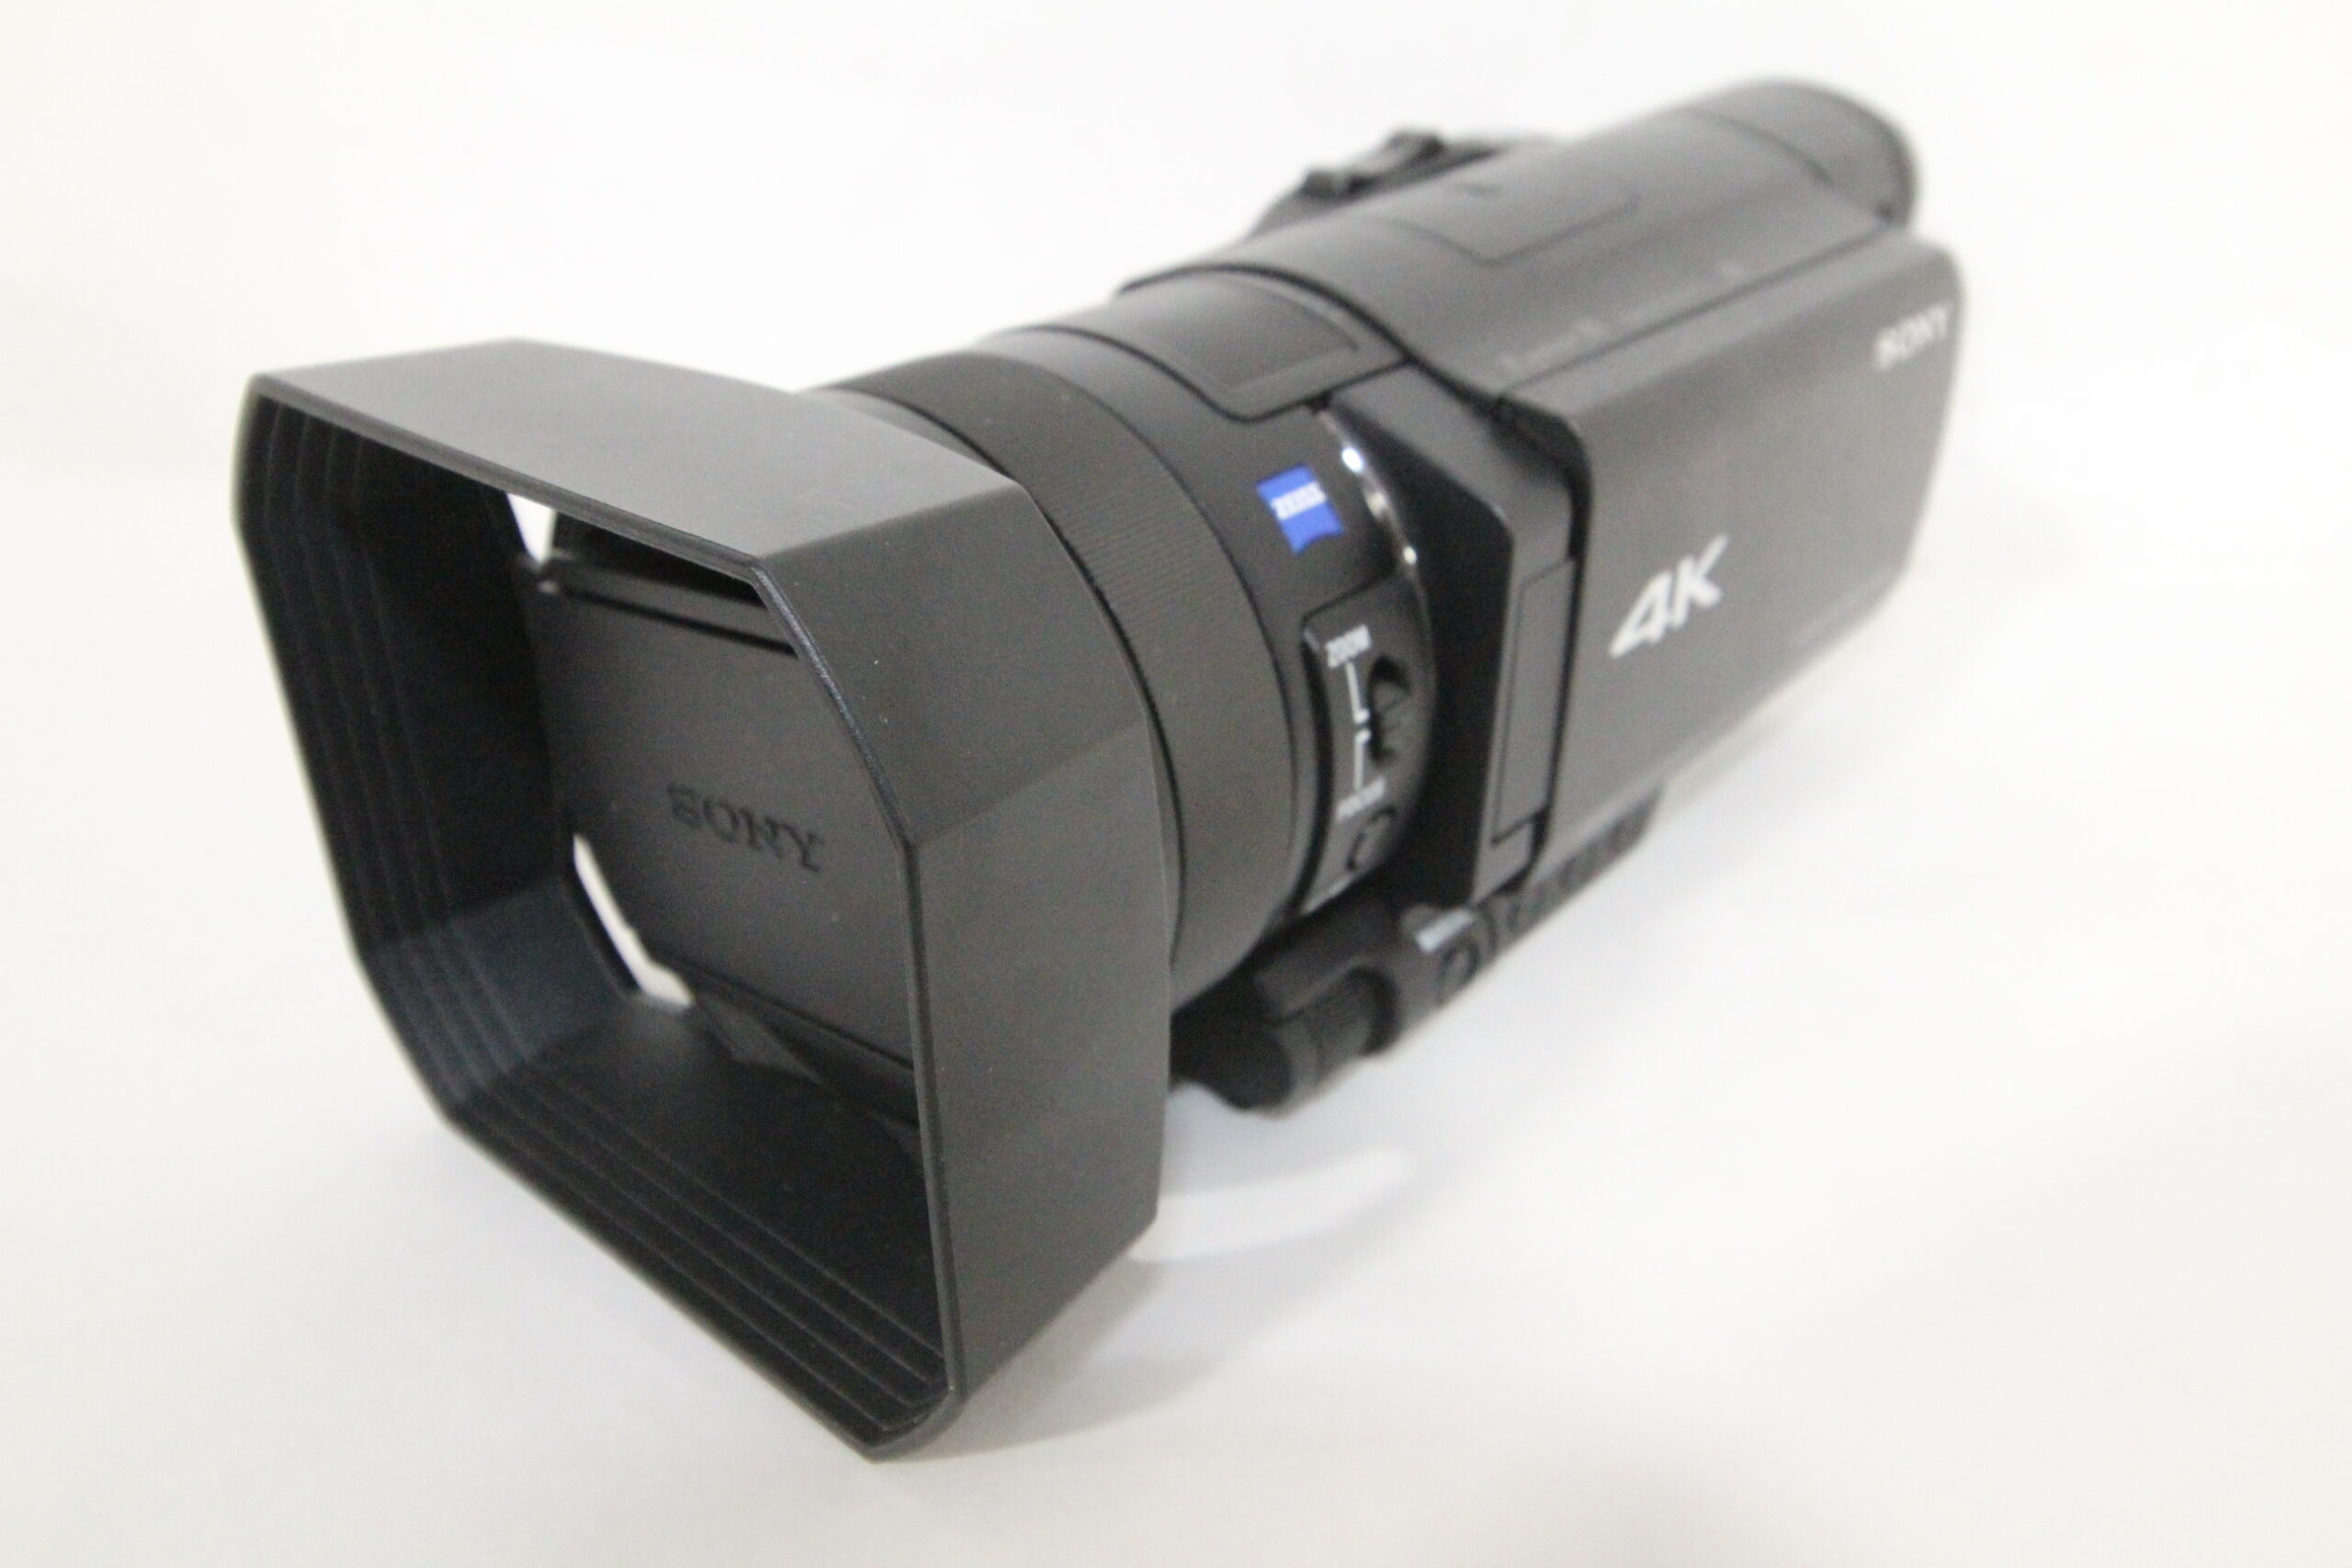 Sony Fdr-ax100e 4K Ultra HD Camcorder